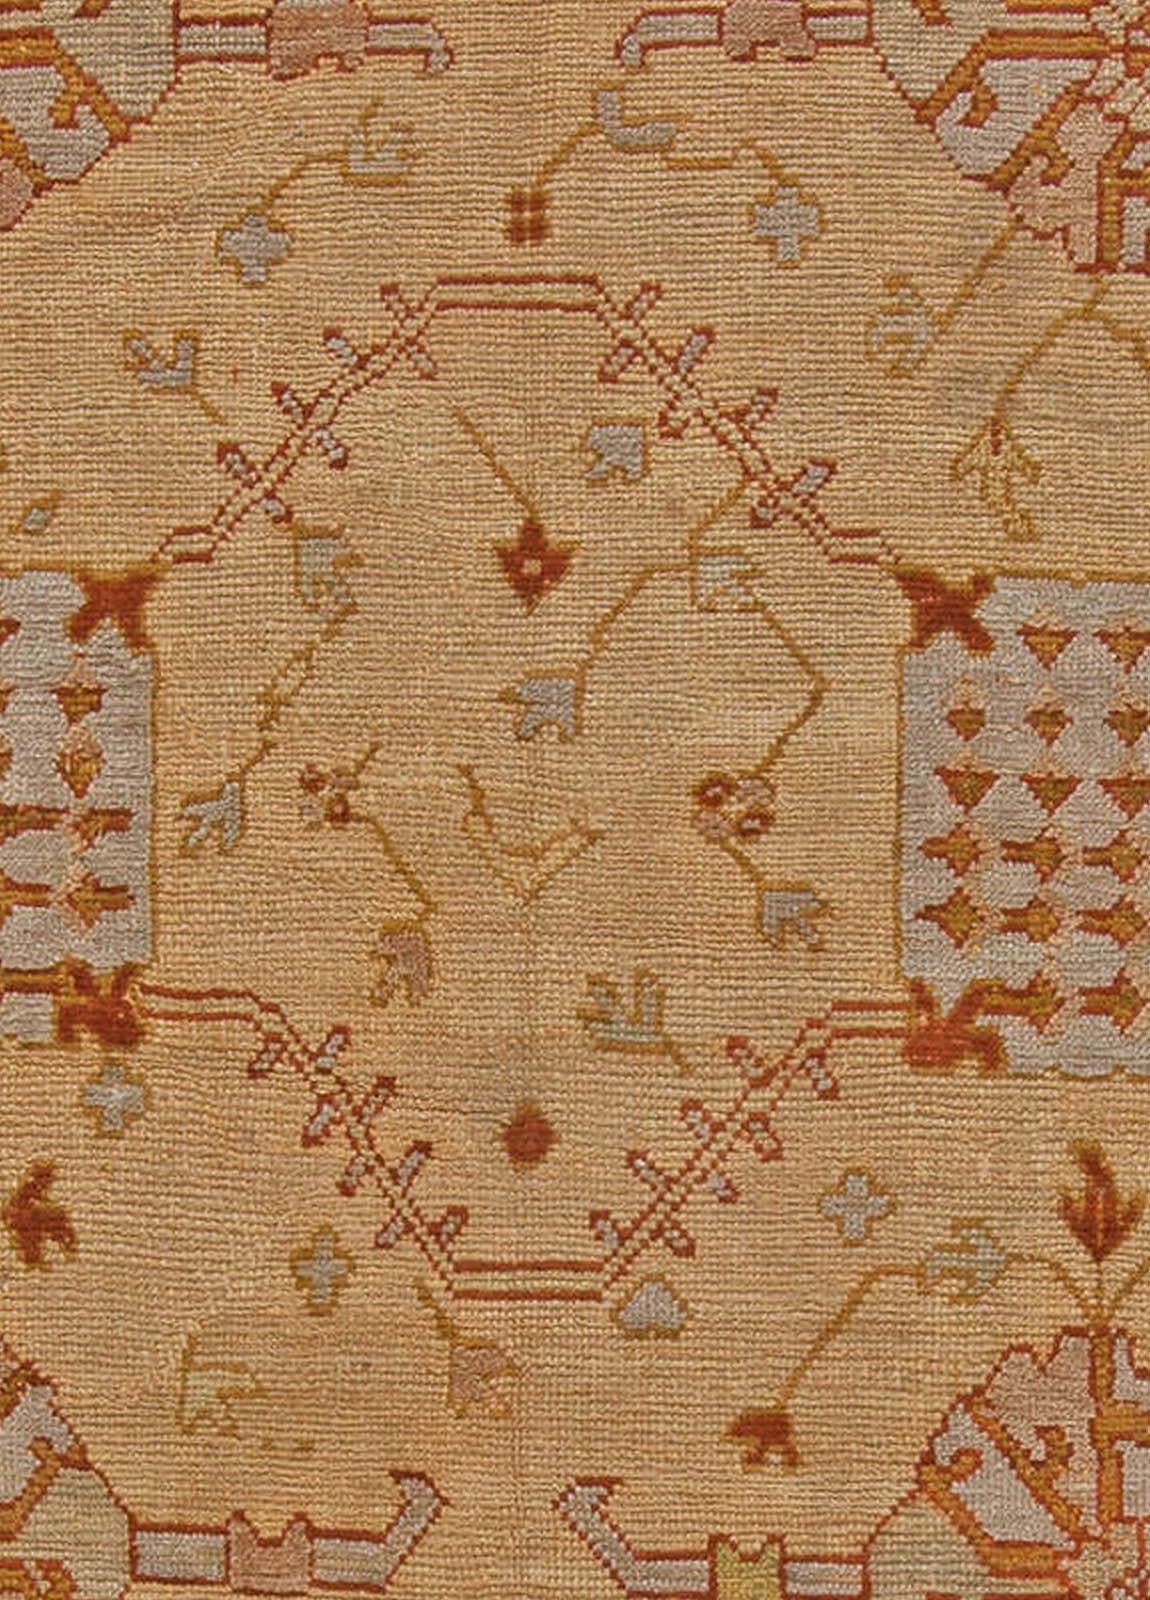 Early 20th century botanic Turkish Oushak yellow handmade wool rug
Size: 11'5